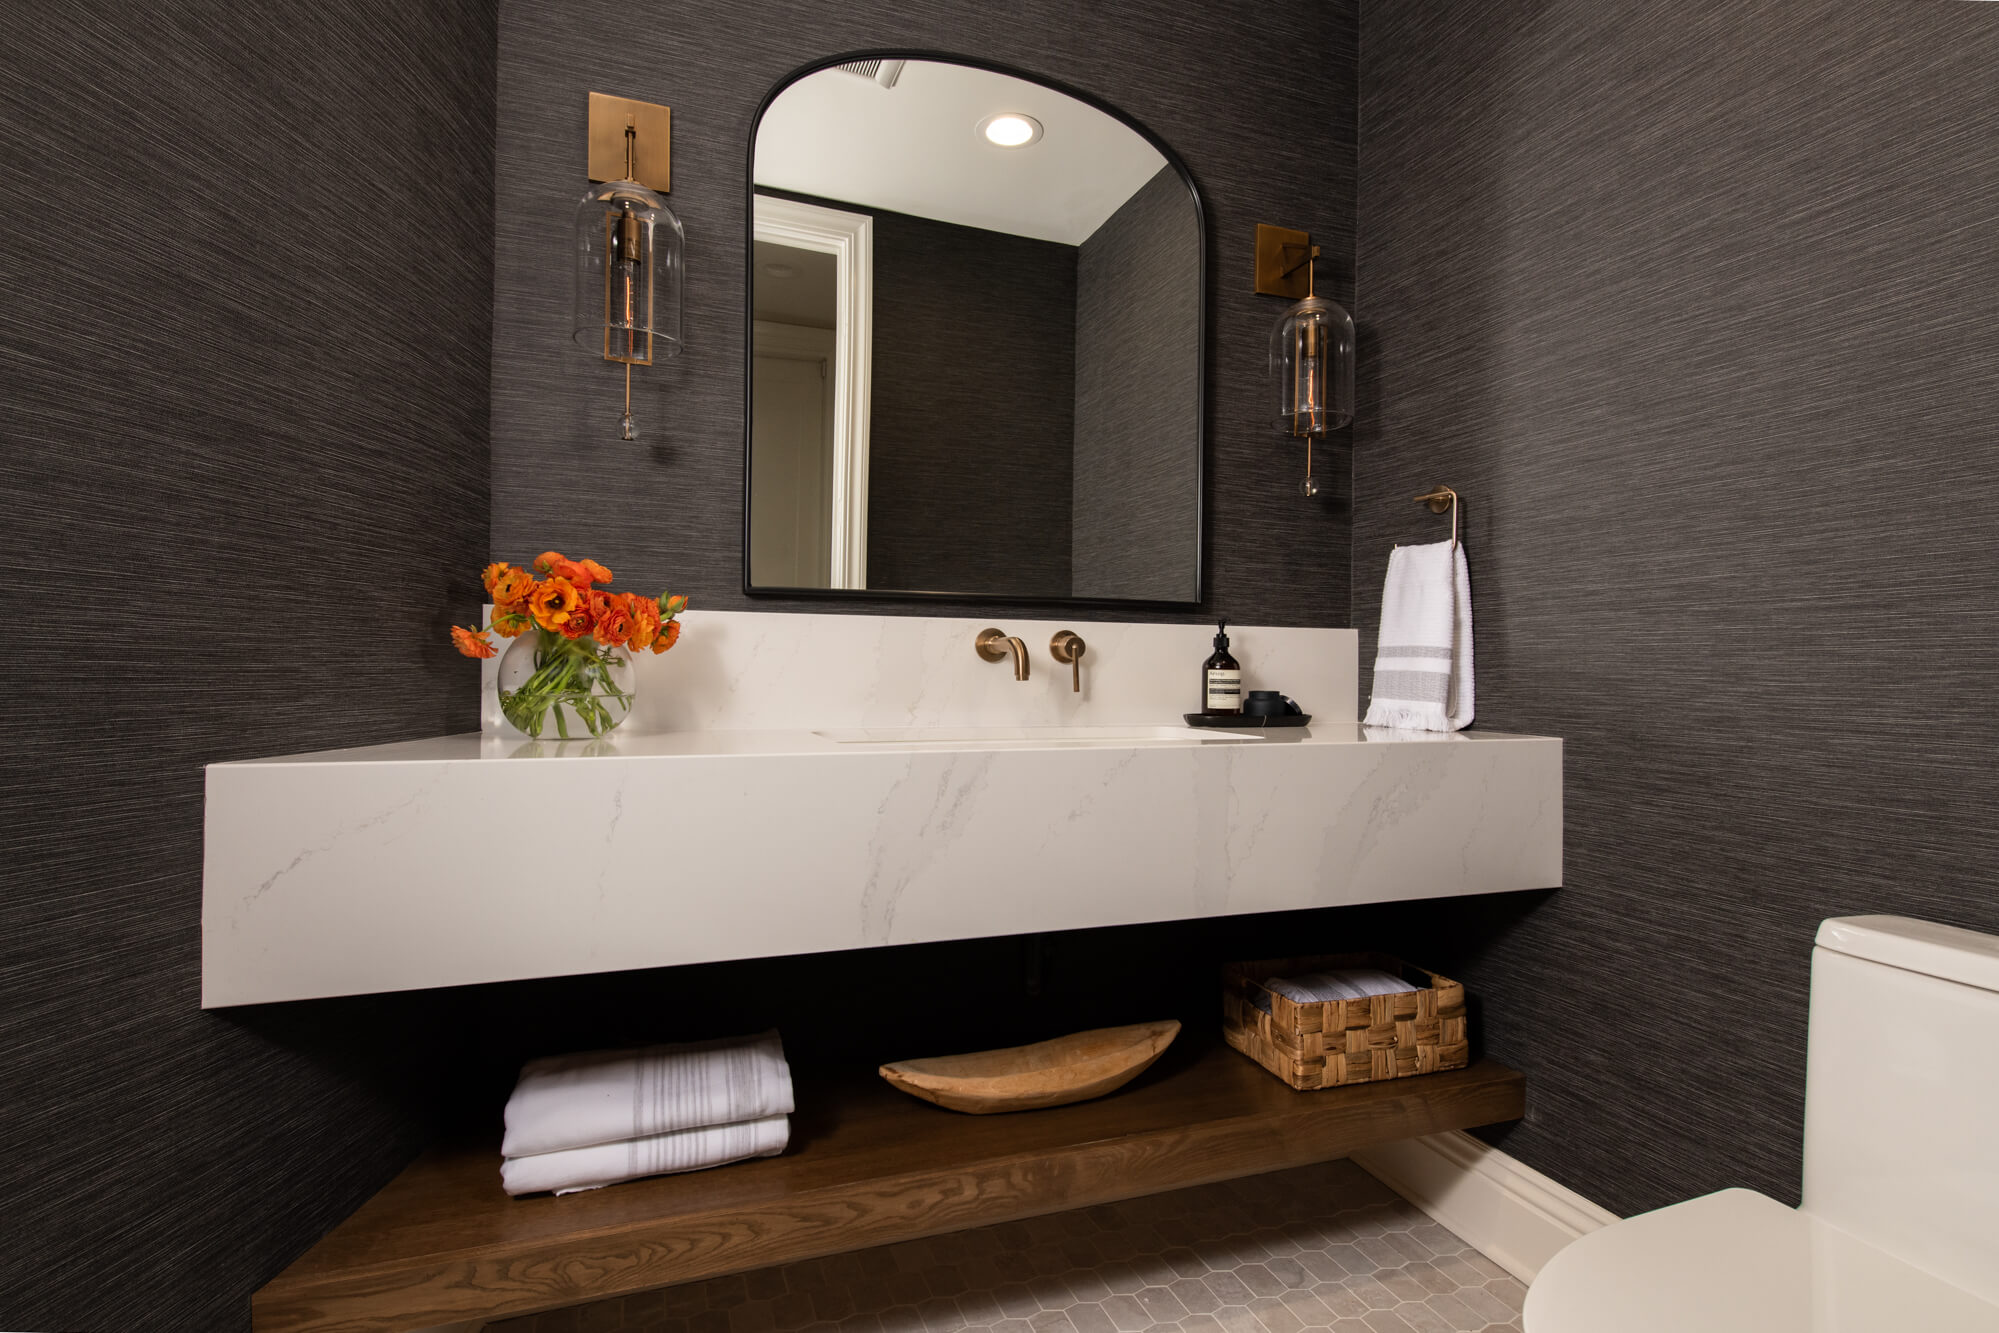 Irvine powder bathroom with floating wood shelf - bathroom remodeling ideas